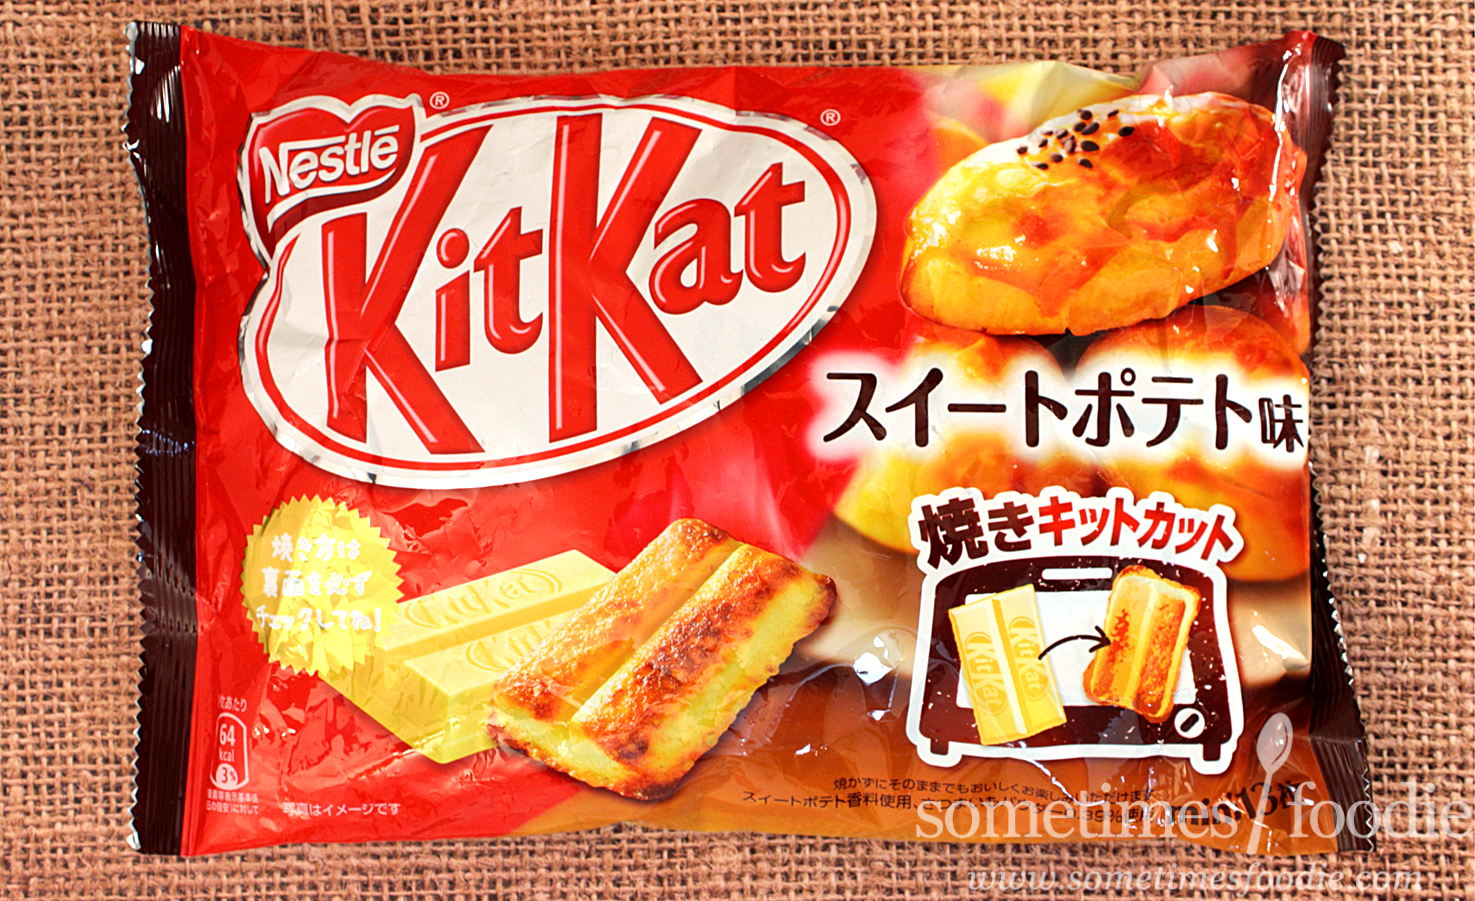 Sometimes Foodie: Bakeable Mini Sweet Potato Kit-Kat - Asian Market